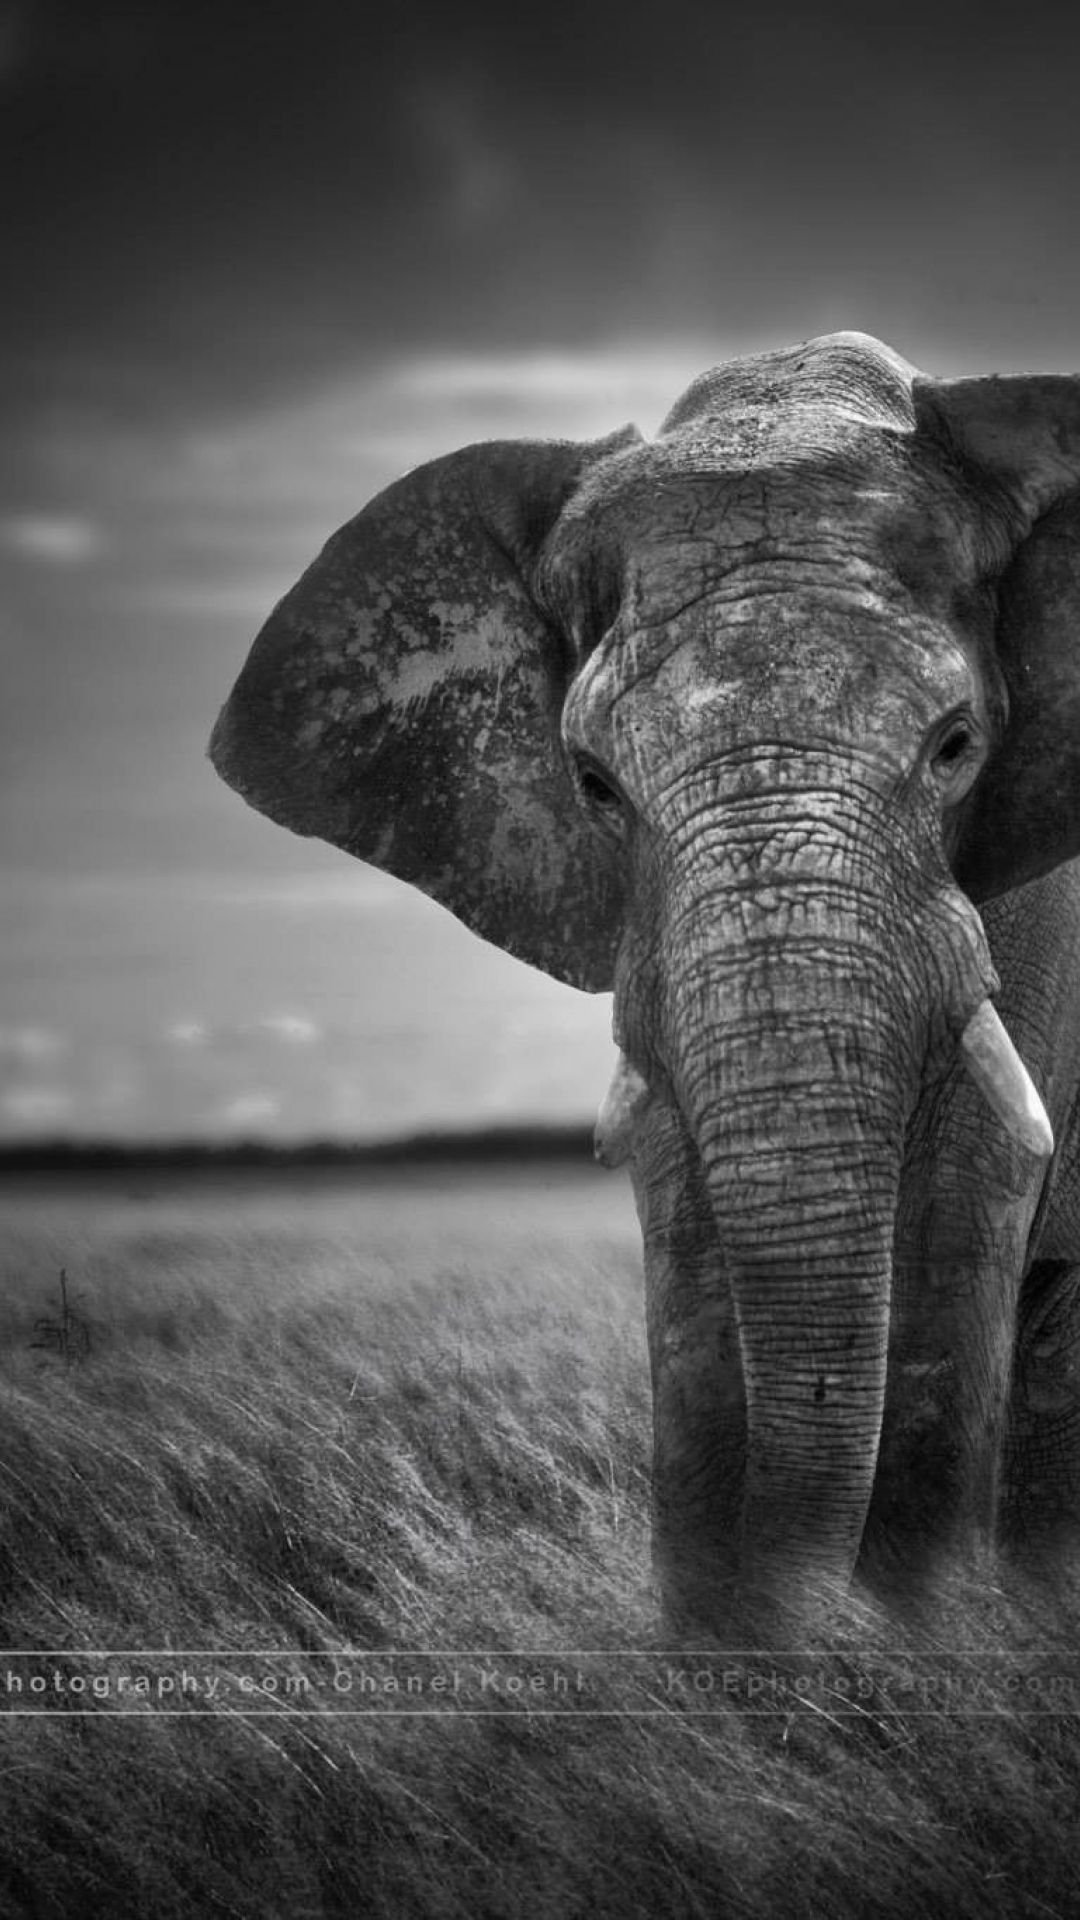 Iphone X Elephant Image Wallpapers